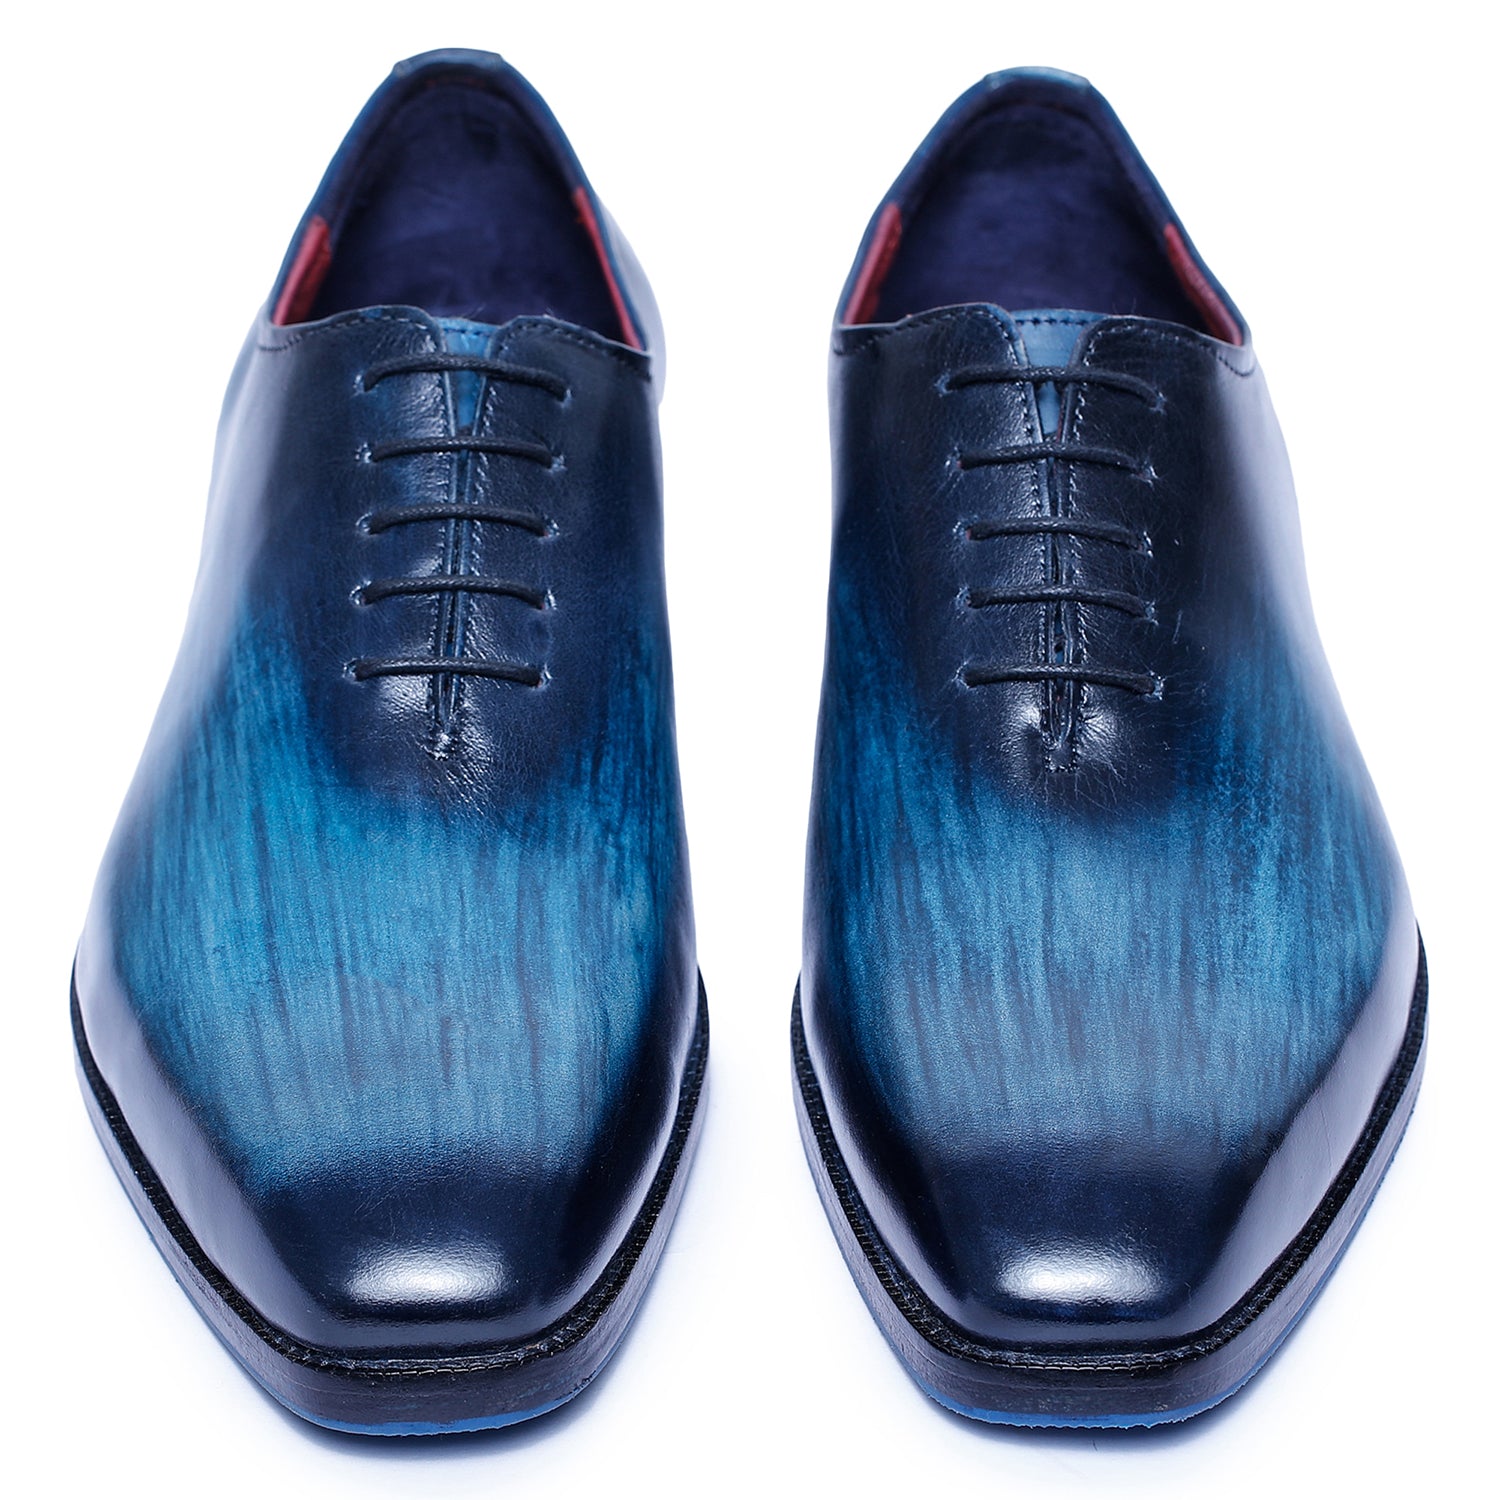 navy blue dress shoe